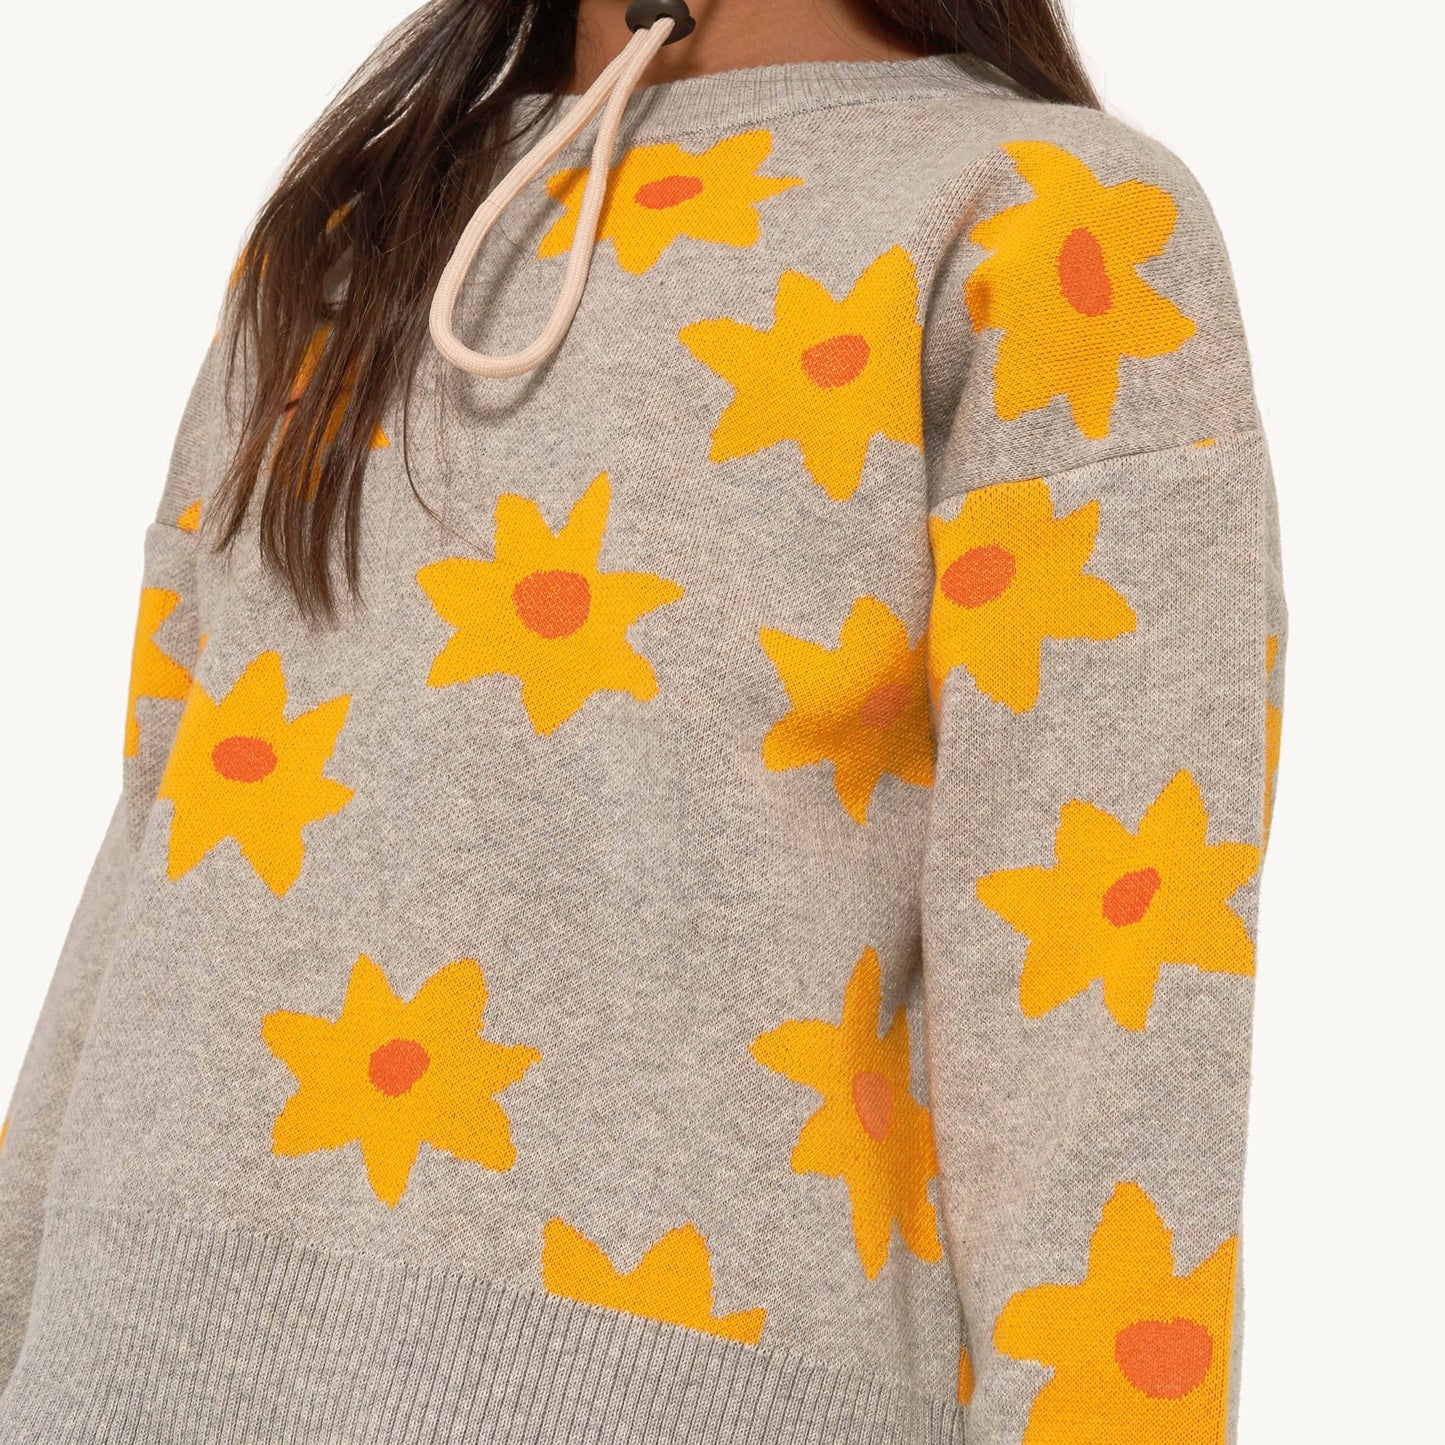 TINYCOTTONS Starfruit Sweater ALWAYS SHOW